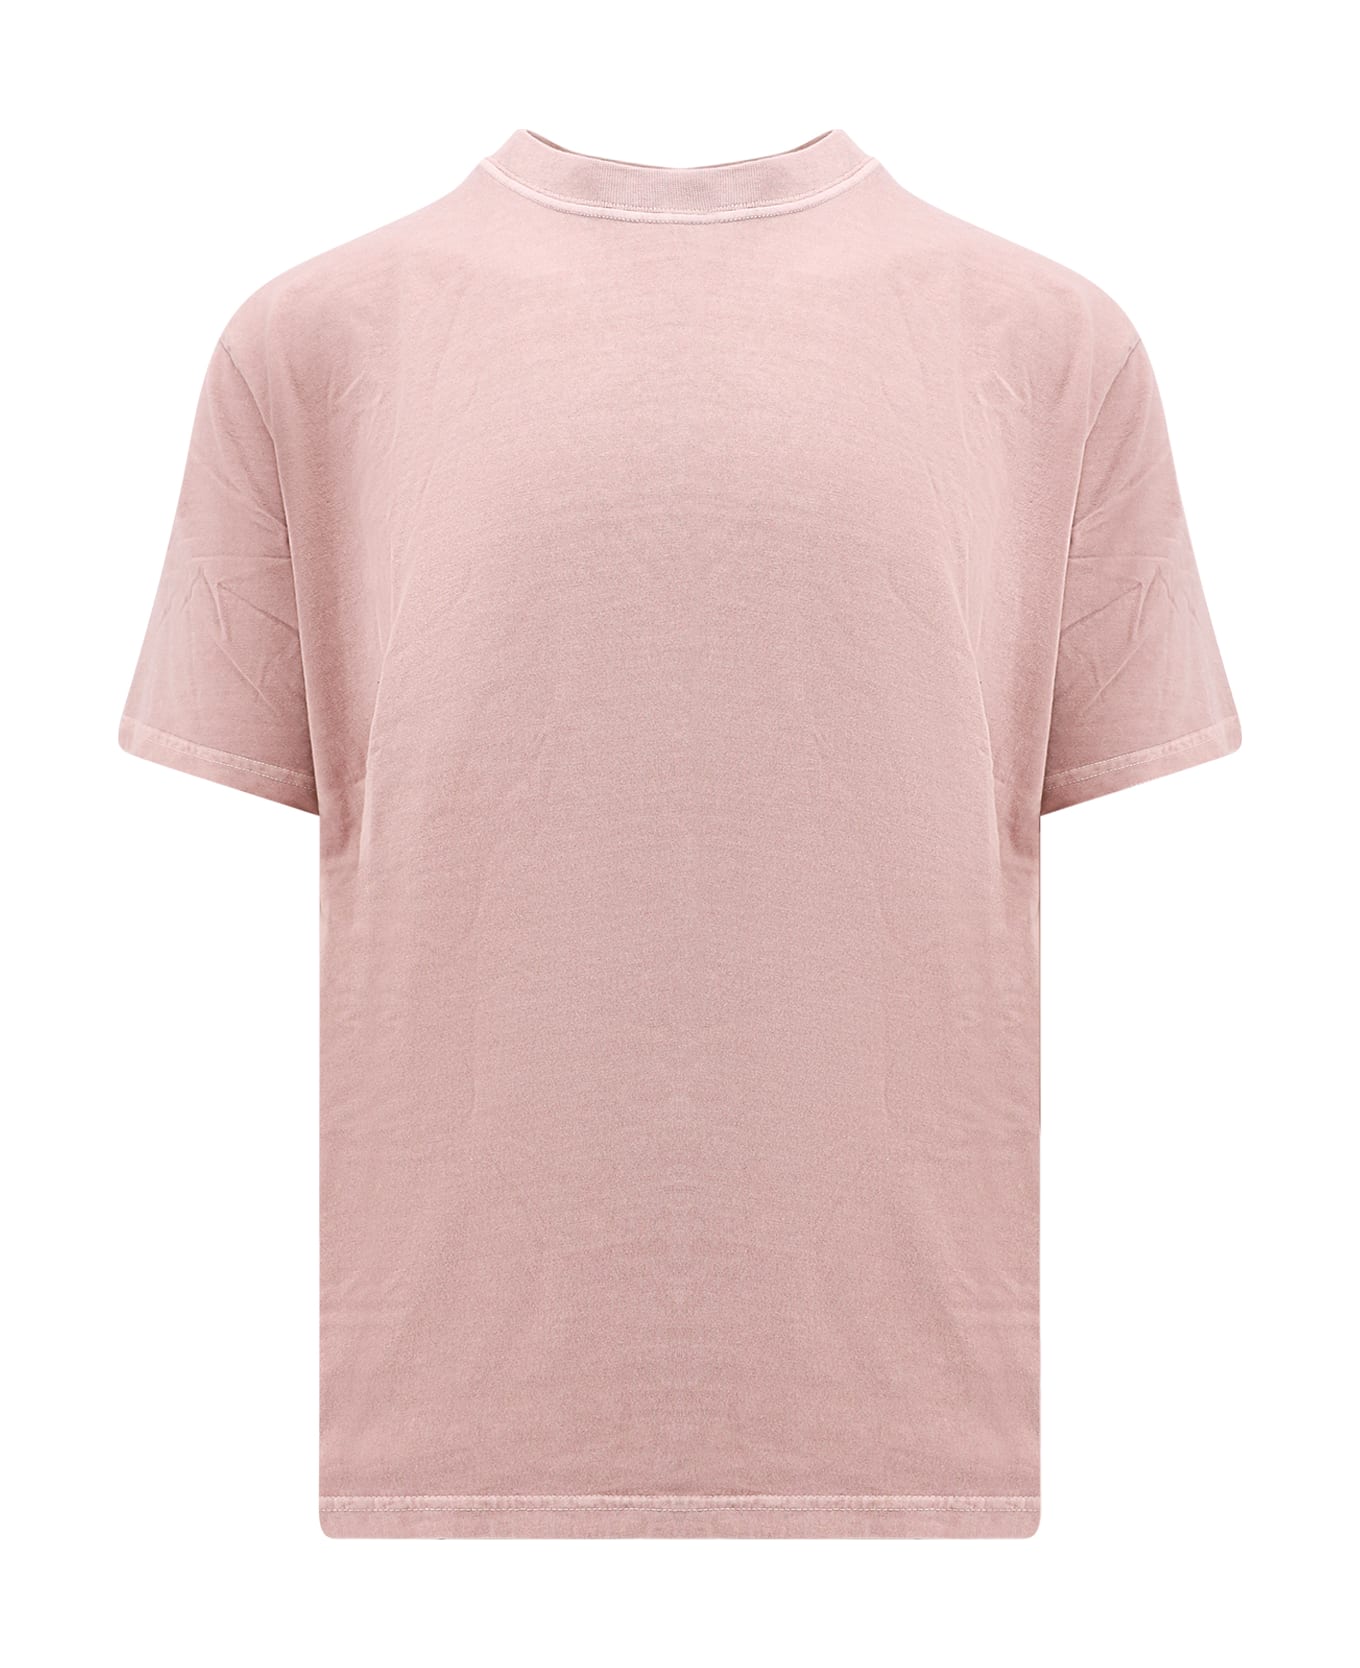 Dickies T-shirt - Pink